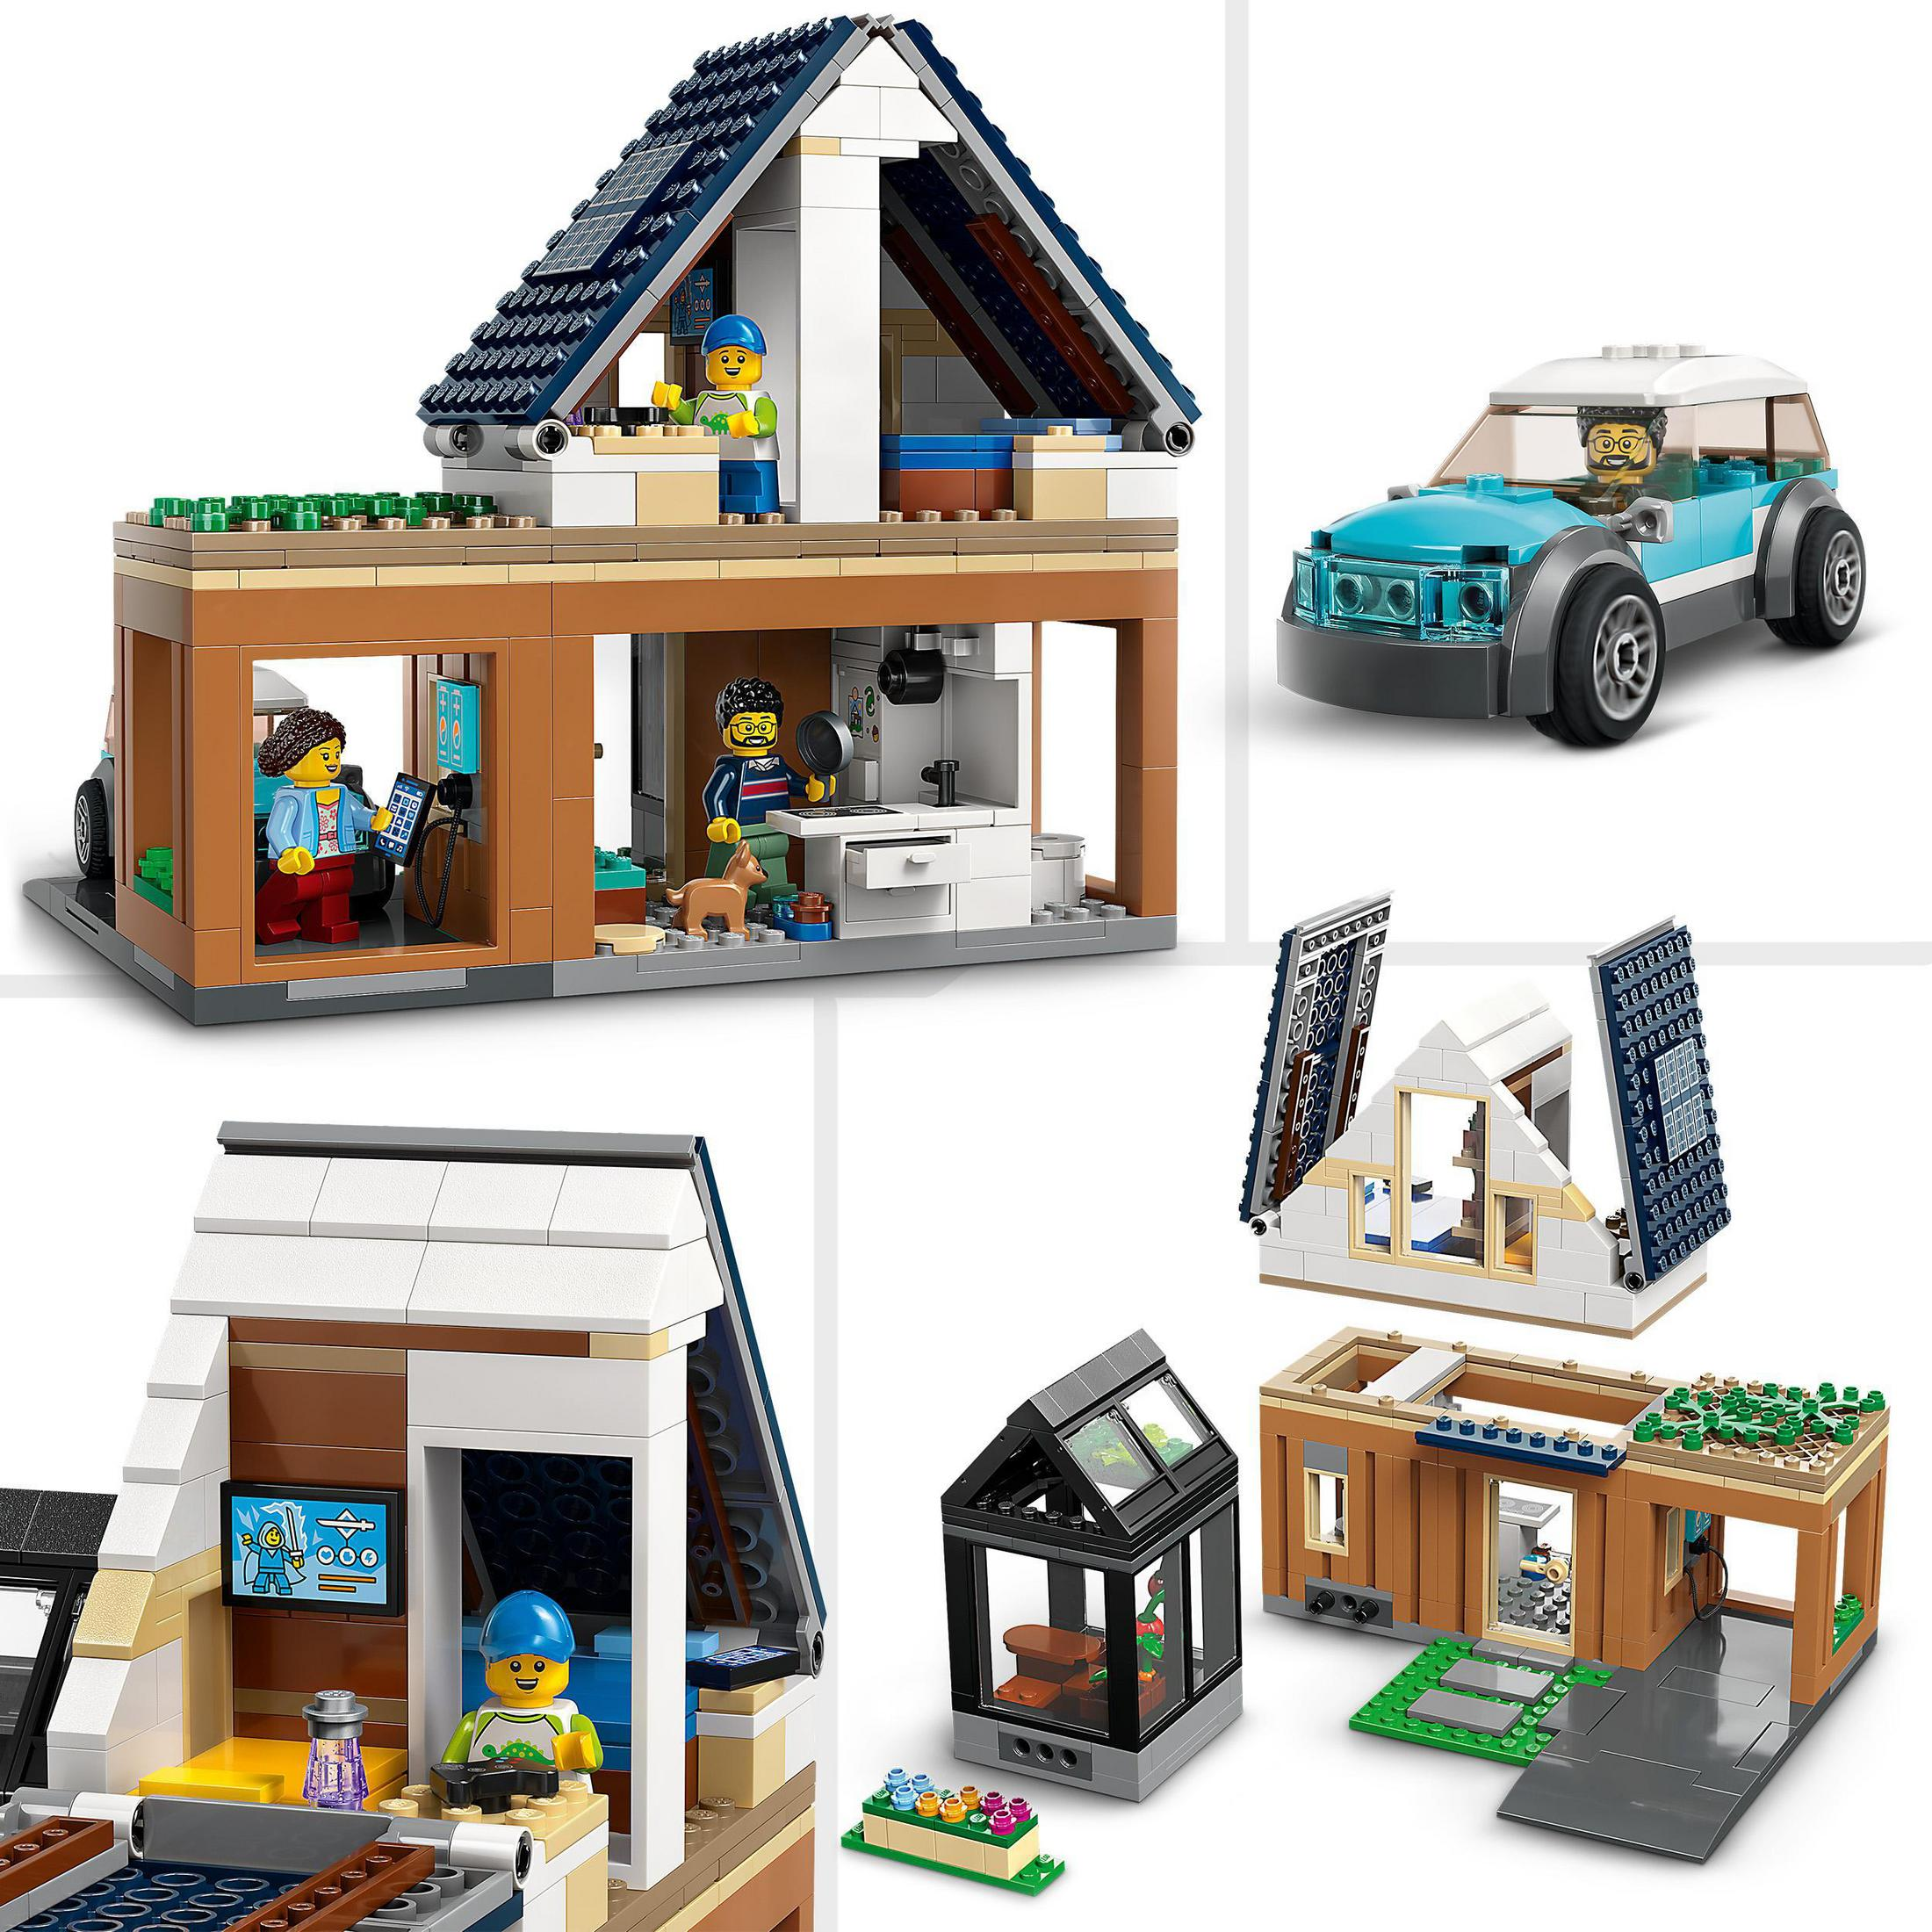 Mehrfarbig FAMILIENHAUS MIT ELEKTROAUTO LEGO 60398 Bausatz,